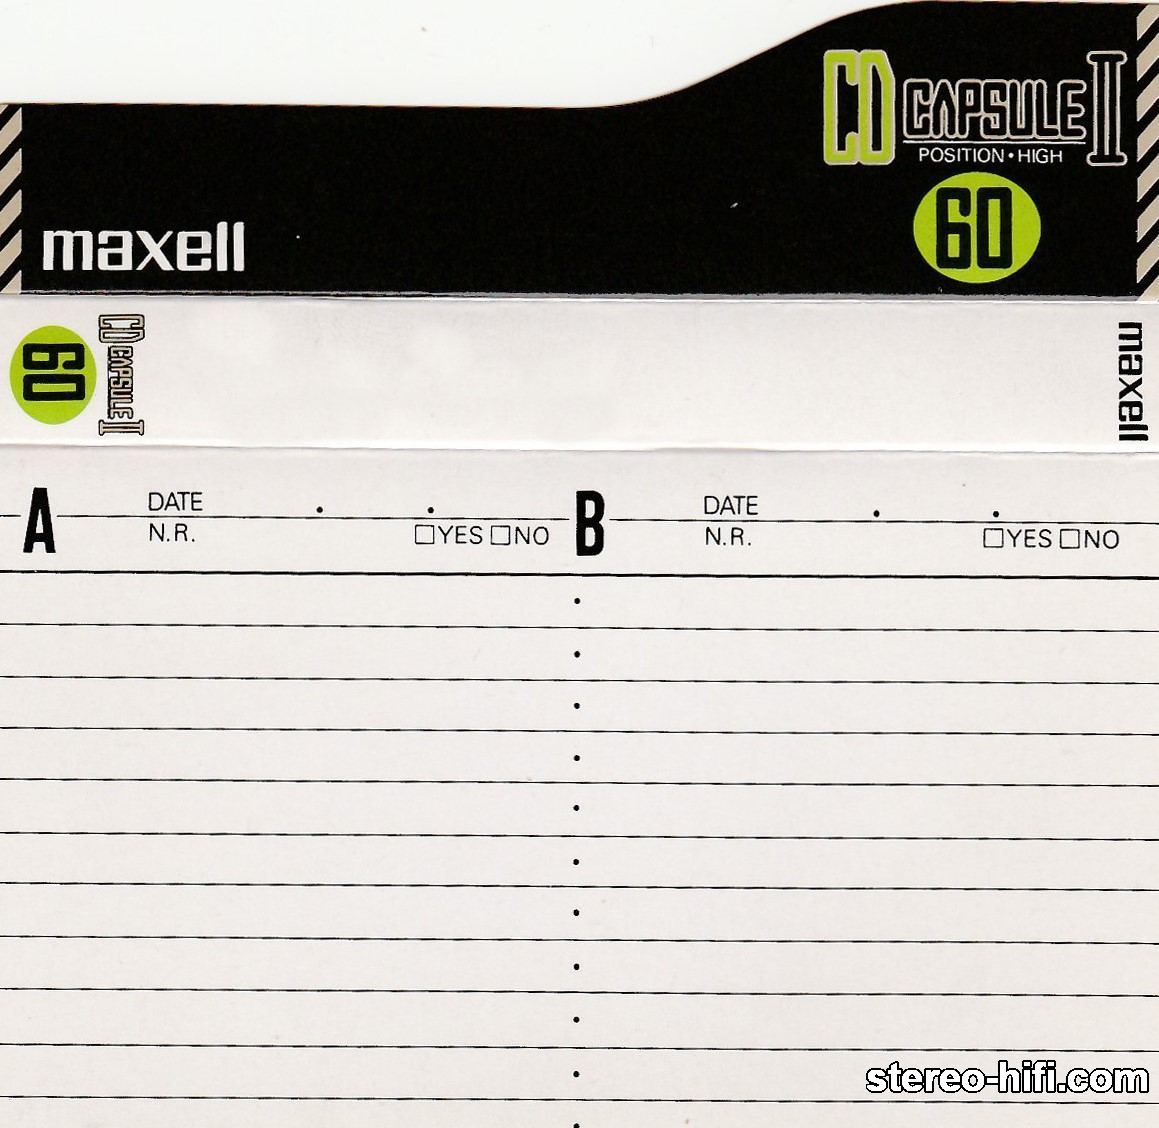 Maxell CD Capsule II C60 - 1990-91 JP